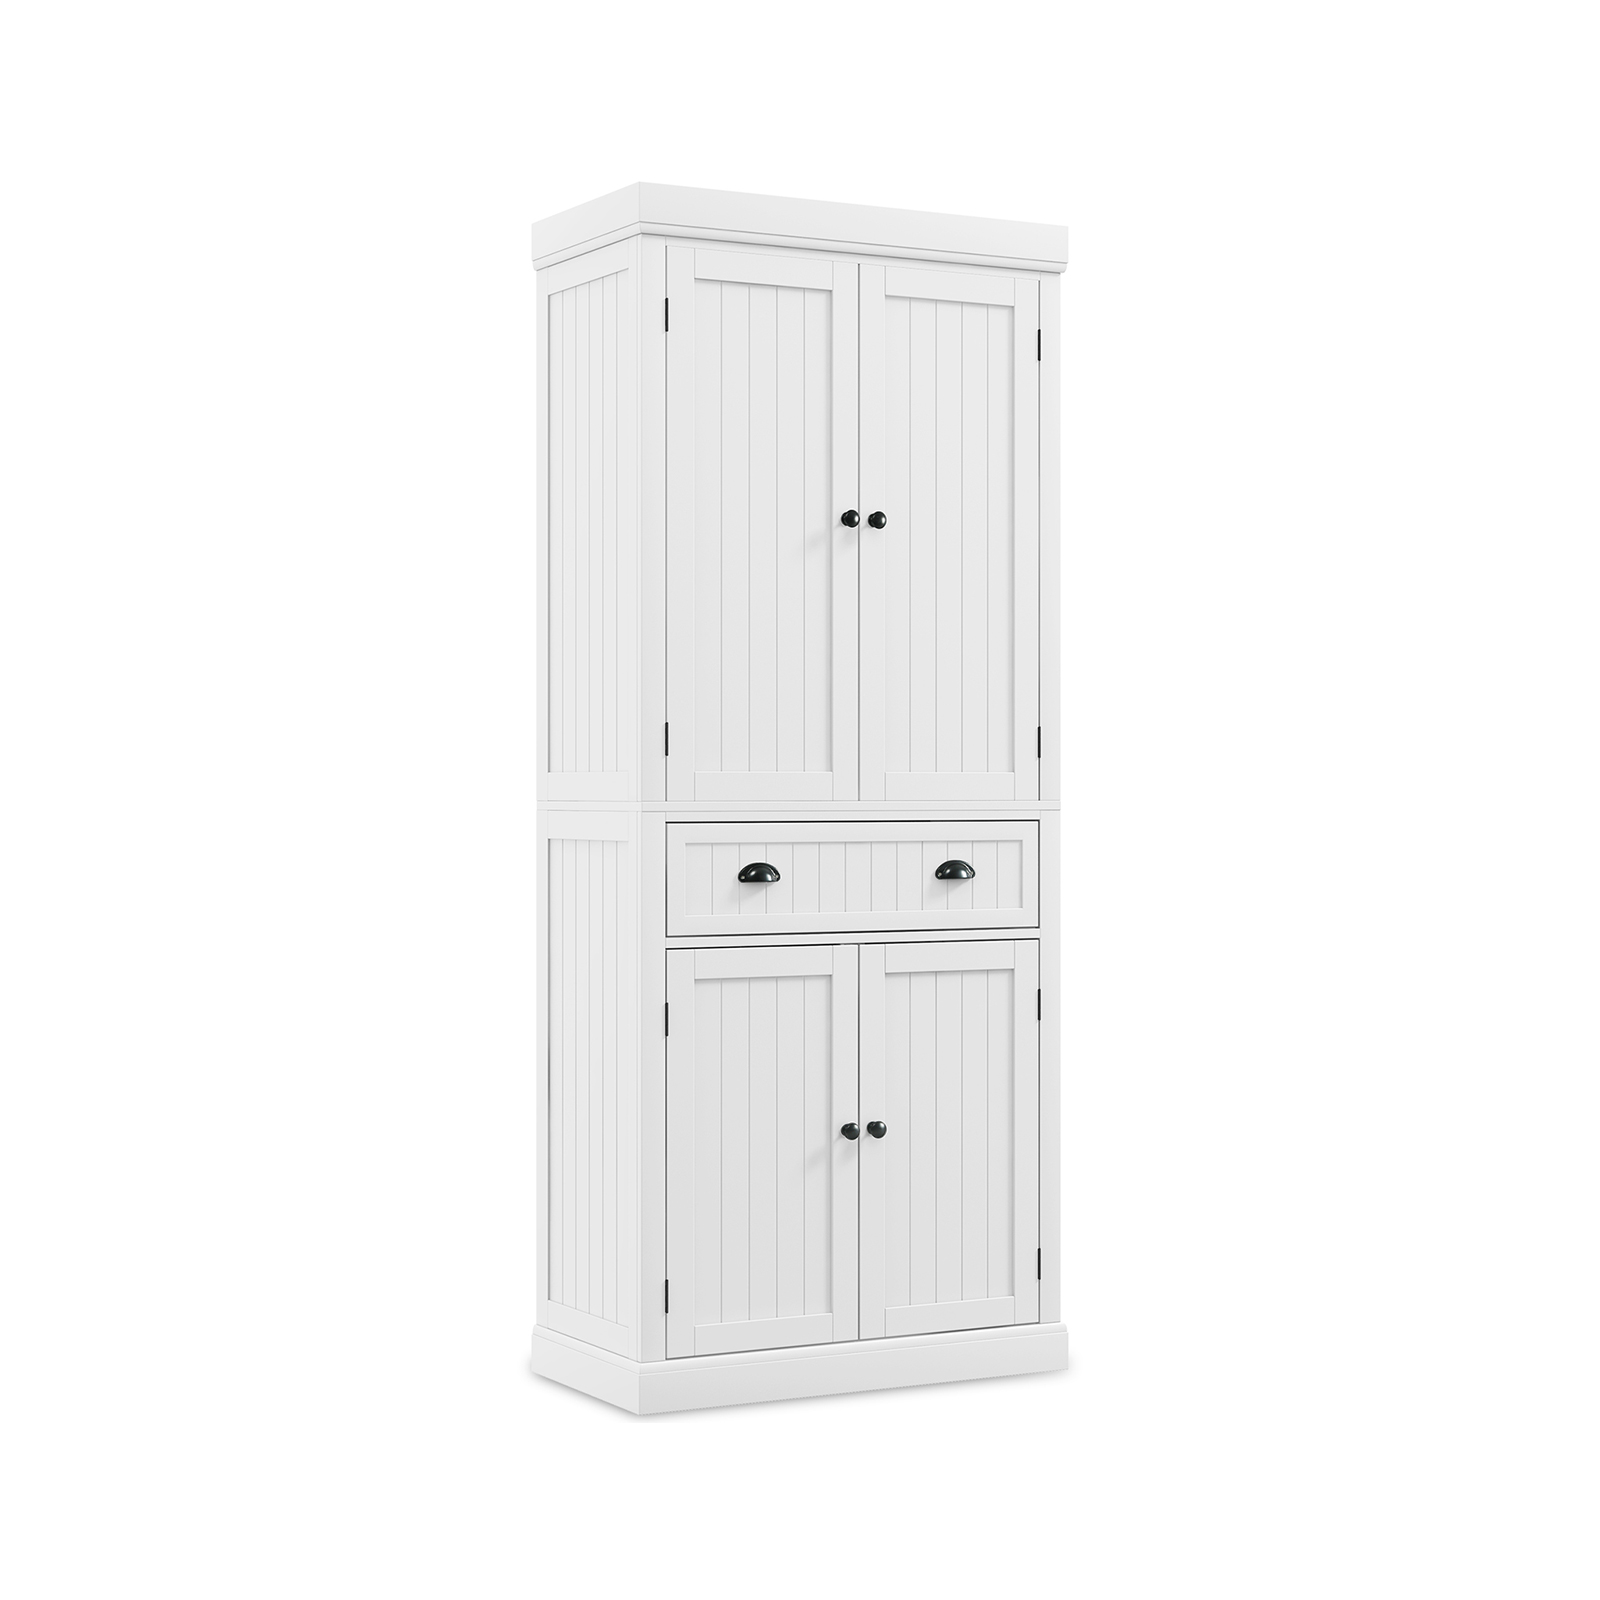 4_Door_Tall_Kitchen_Cupboard_Adjustable_Shelves_and_Drawer_White-3.jpg